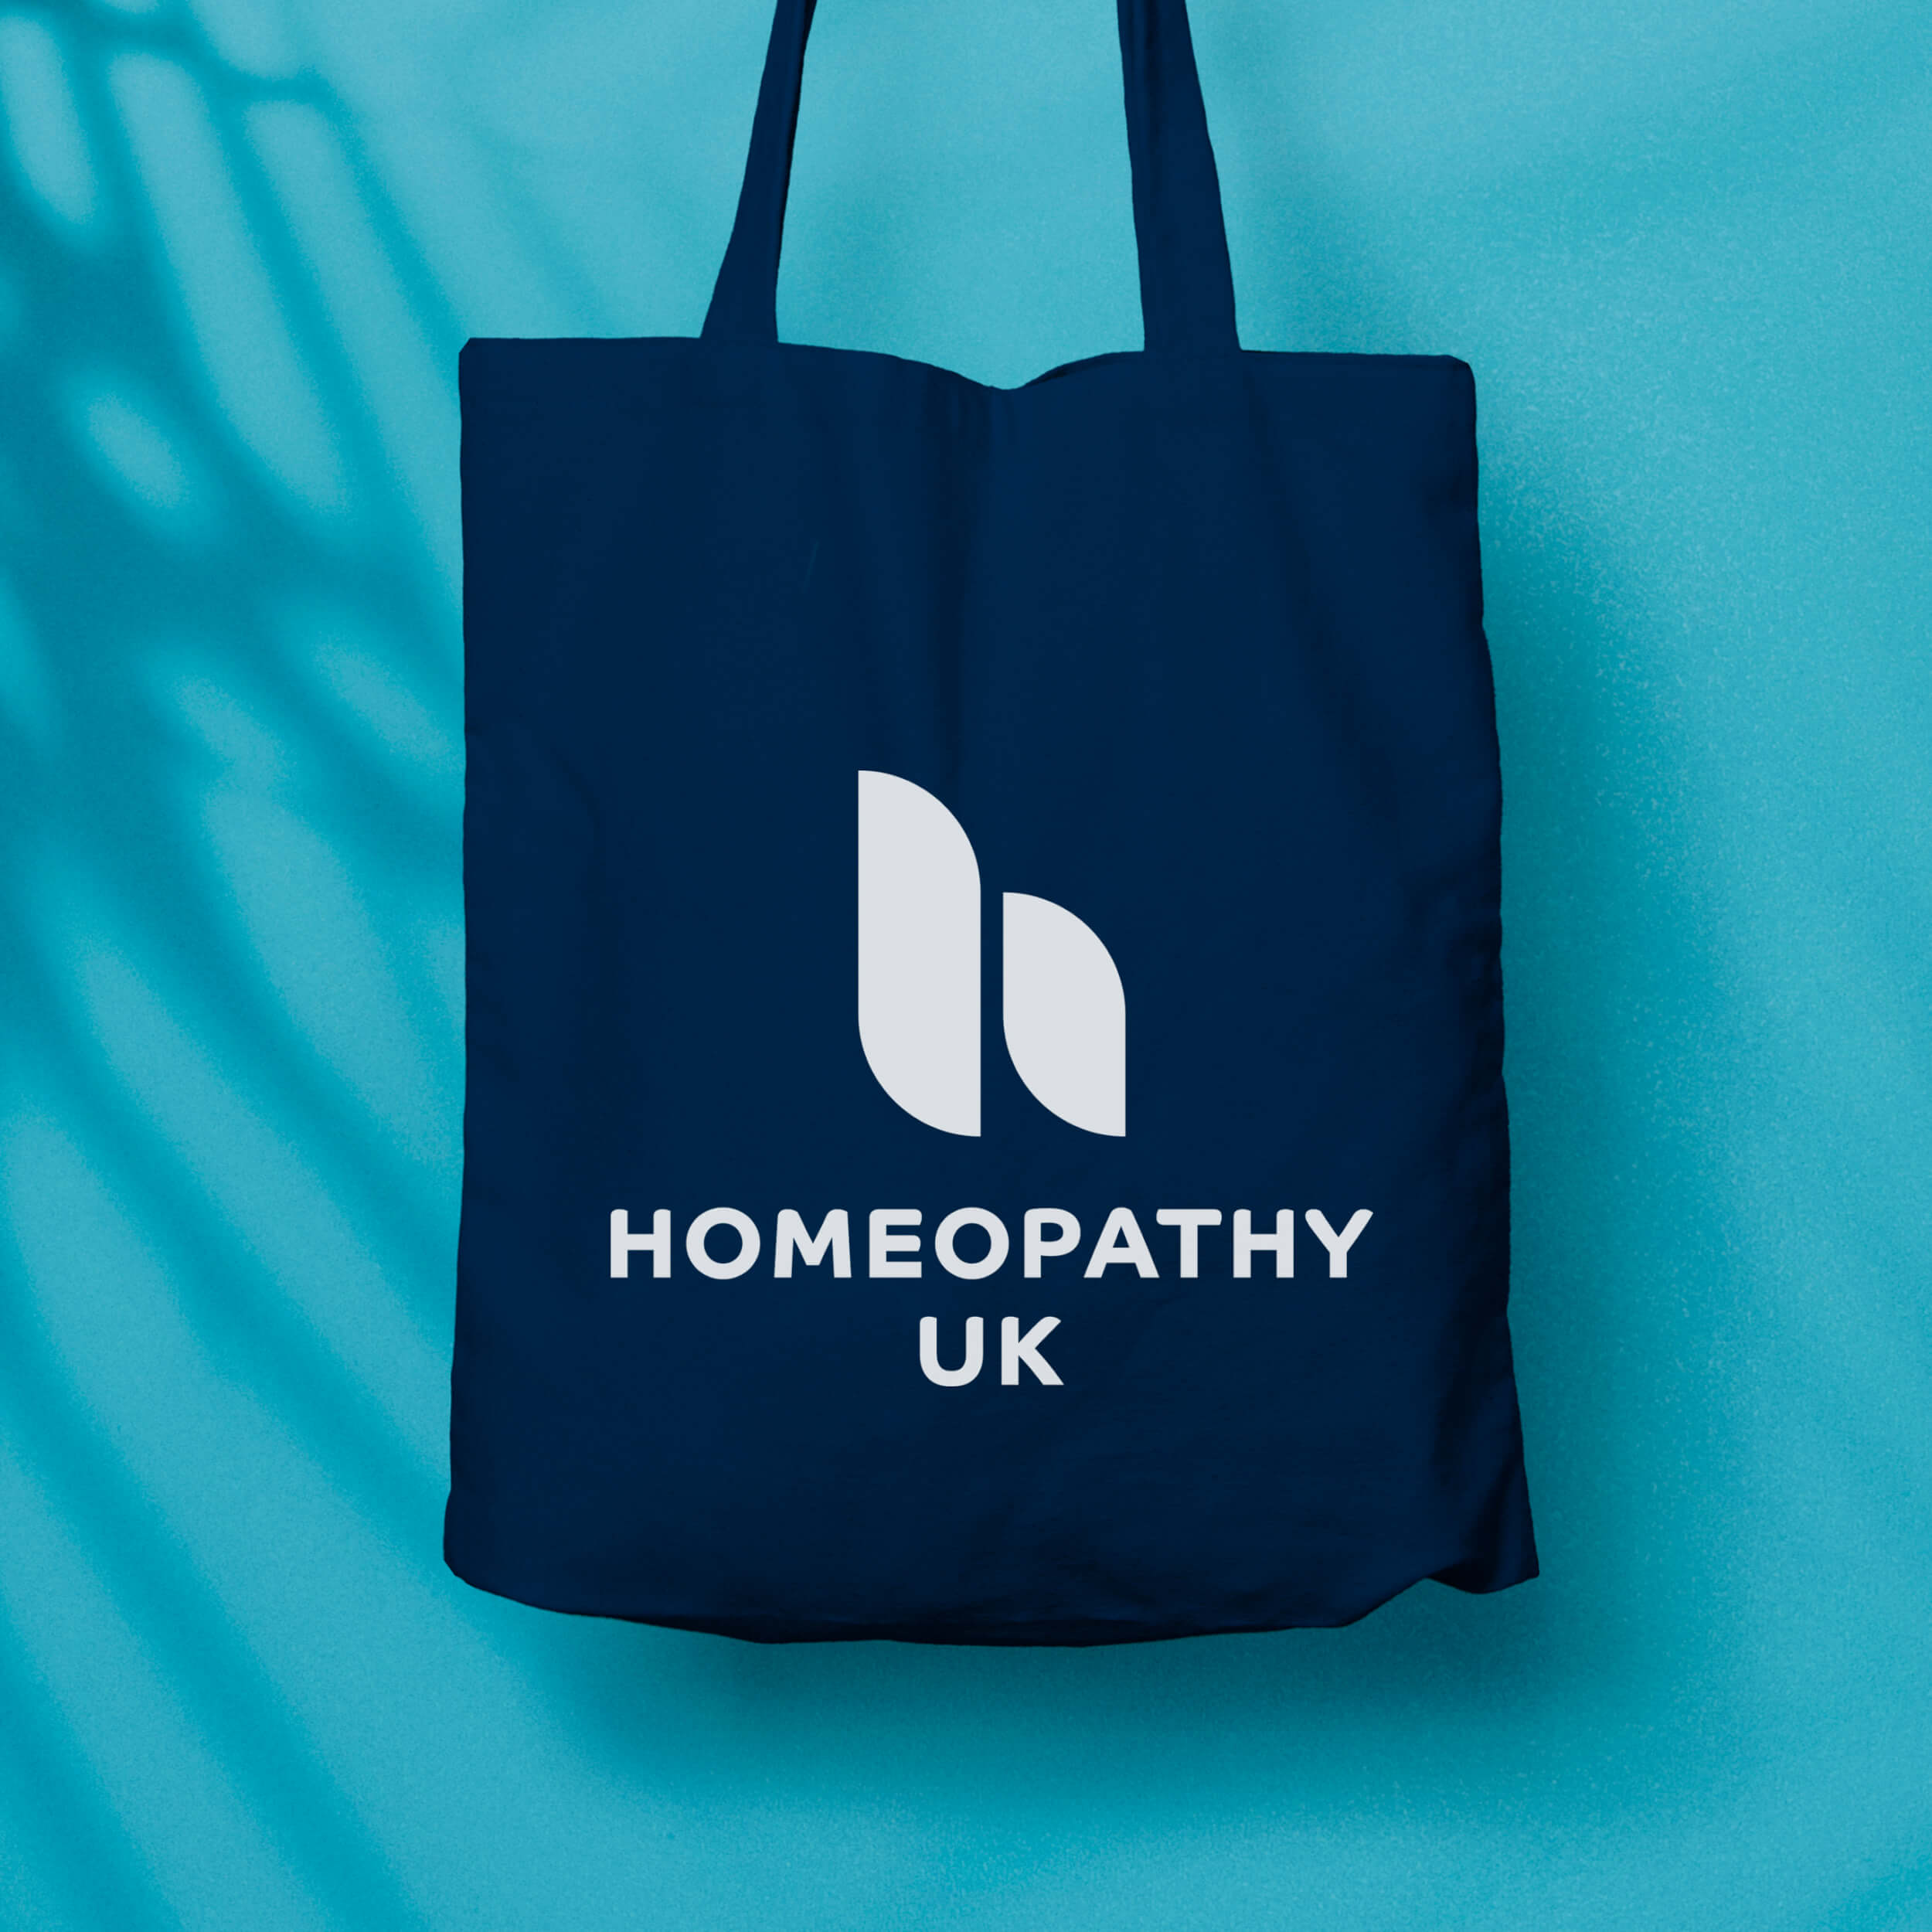 Homeopathy UK tote bag show branding